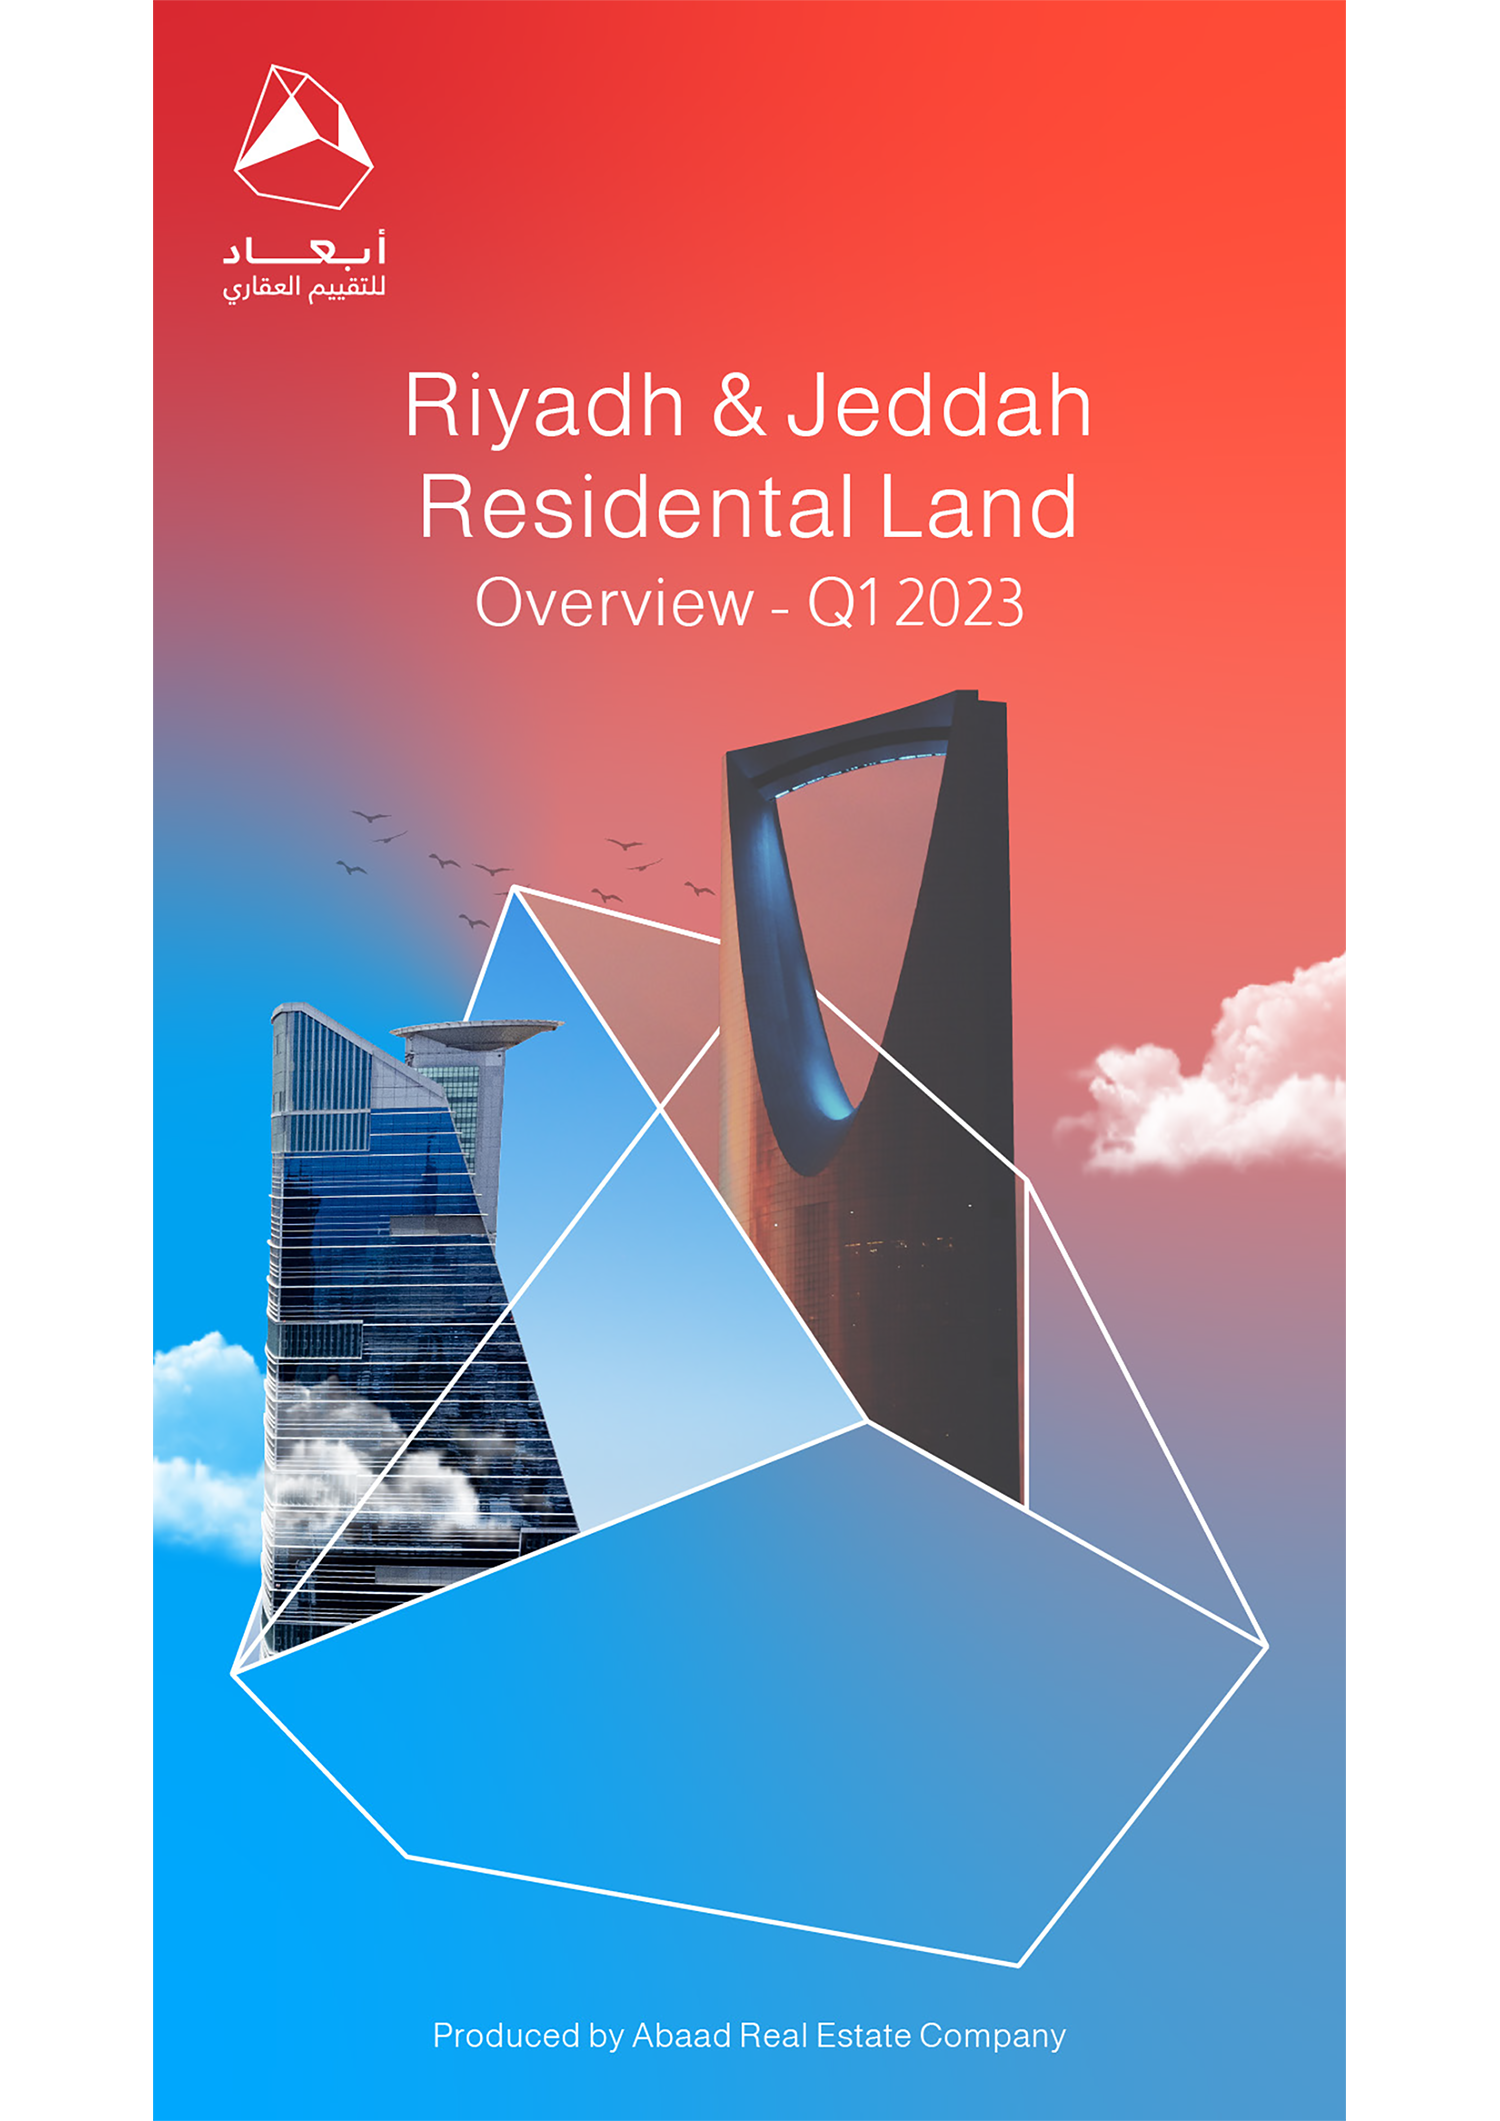 Q1 2023_Riyadh & Jeddah Residential Land Overview